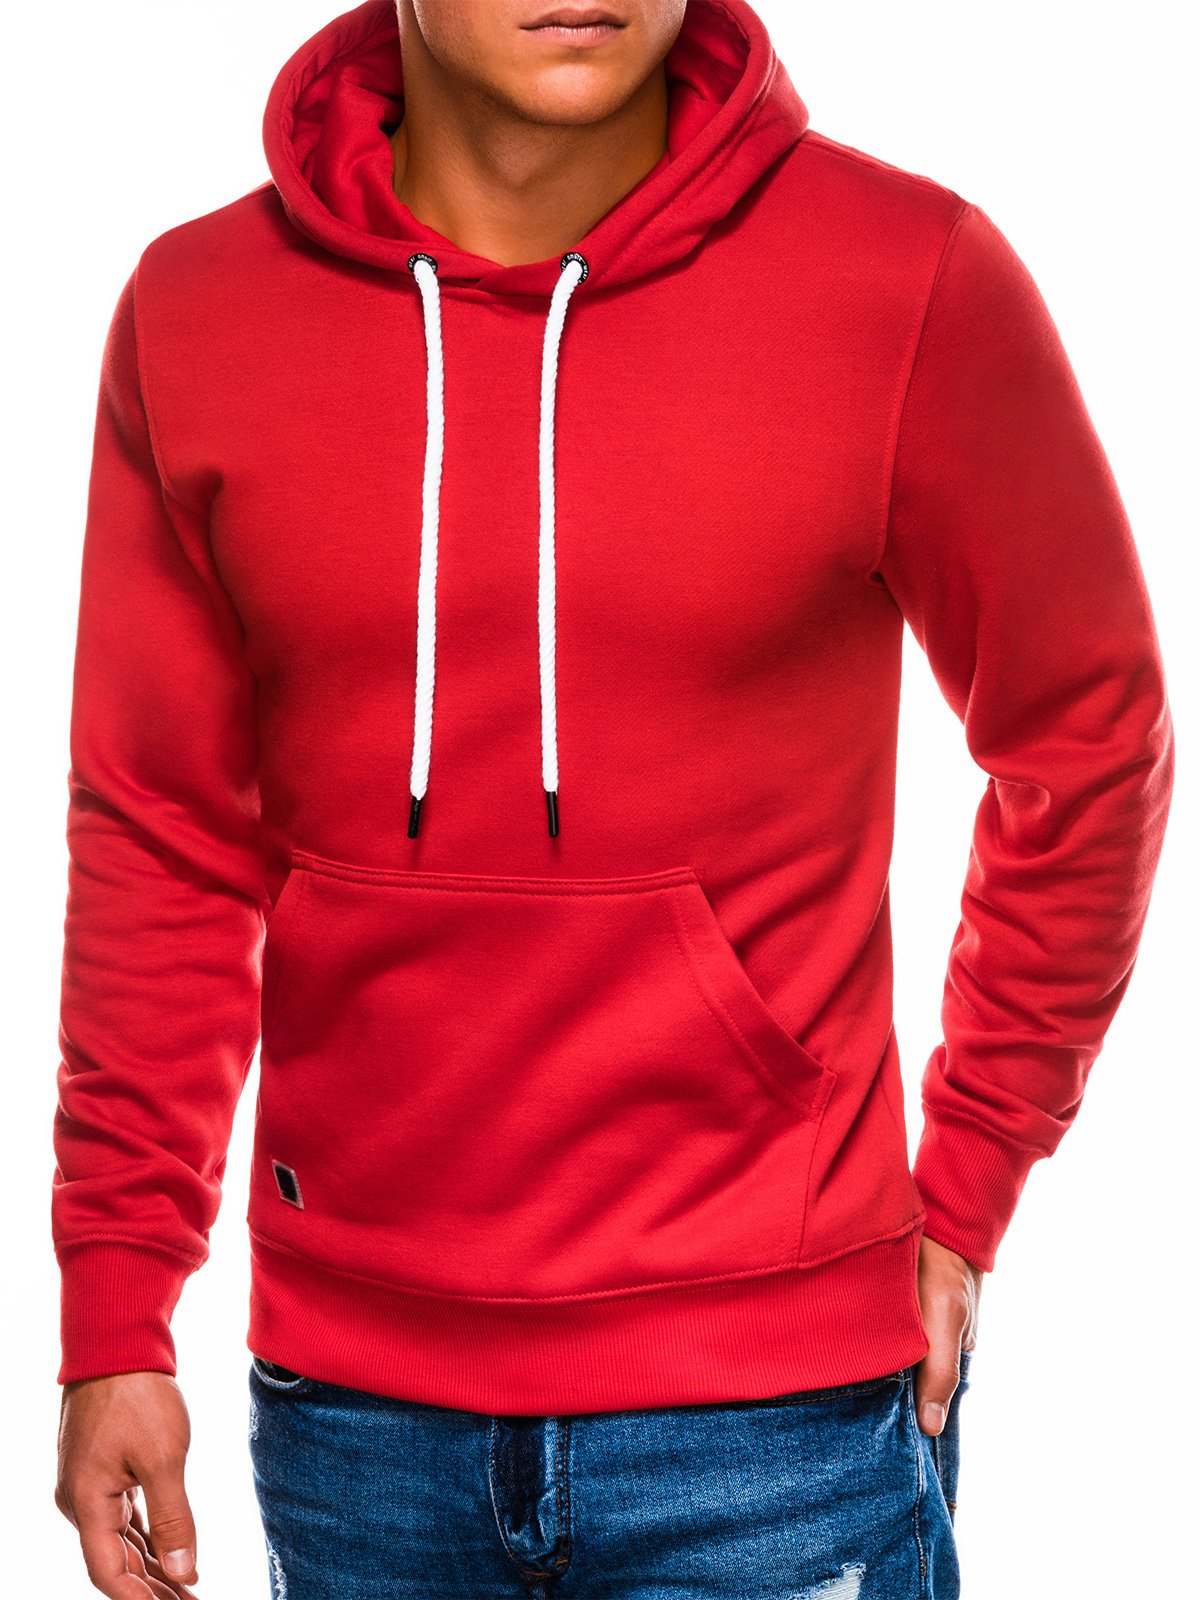 Men's hooded sweatshirt B979 - red | MODONE wholesale - Clothing For Men